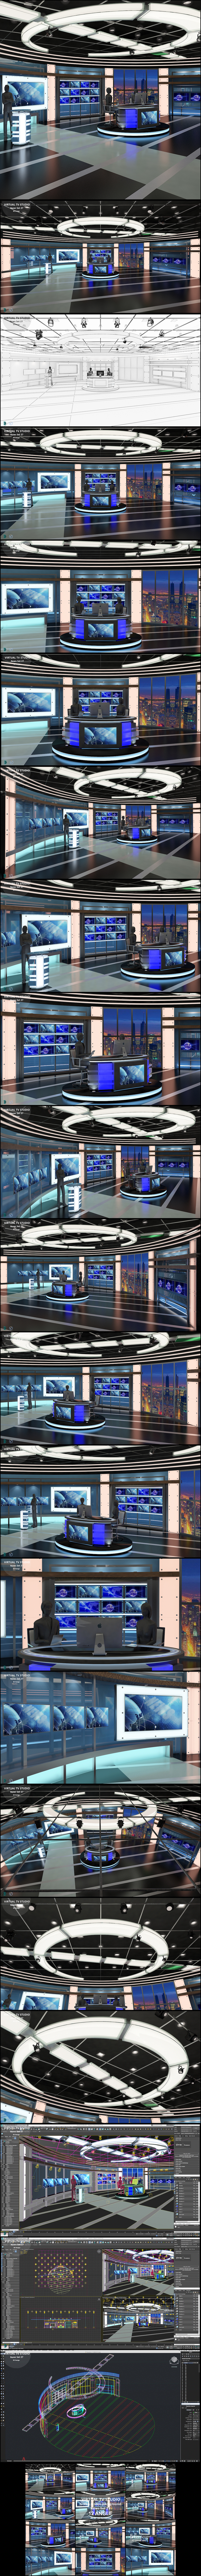 Virtual TV Studio News Set 27 - 3D Model Designs